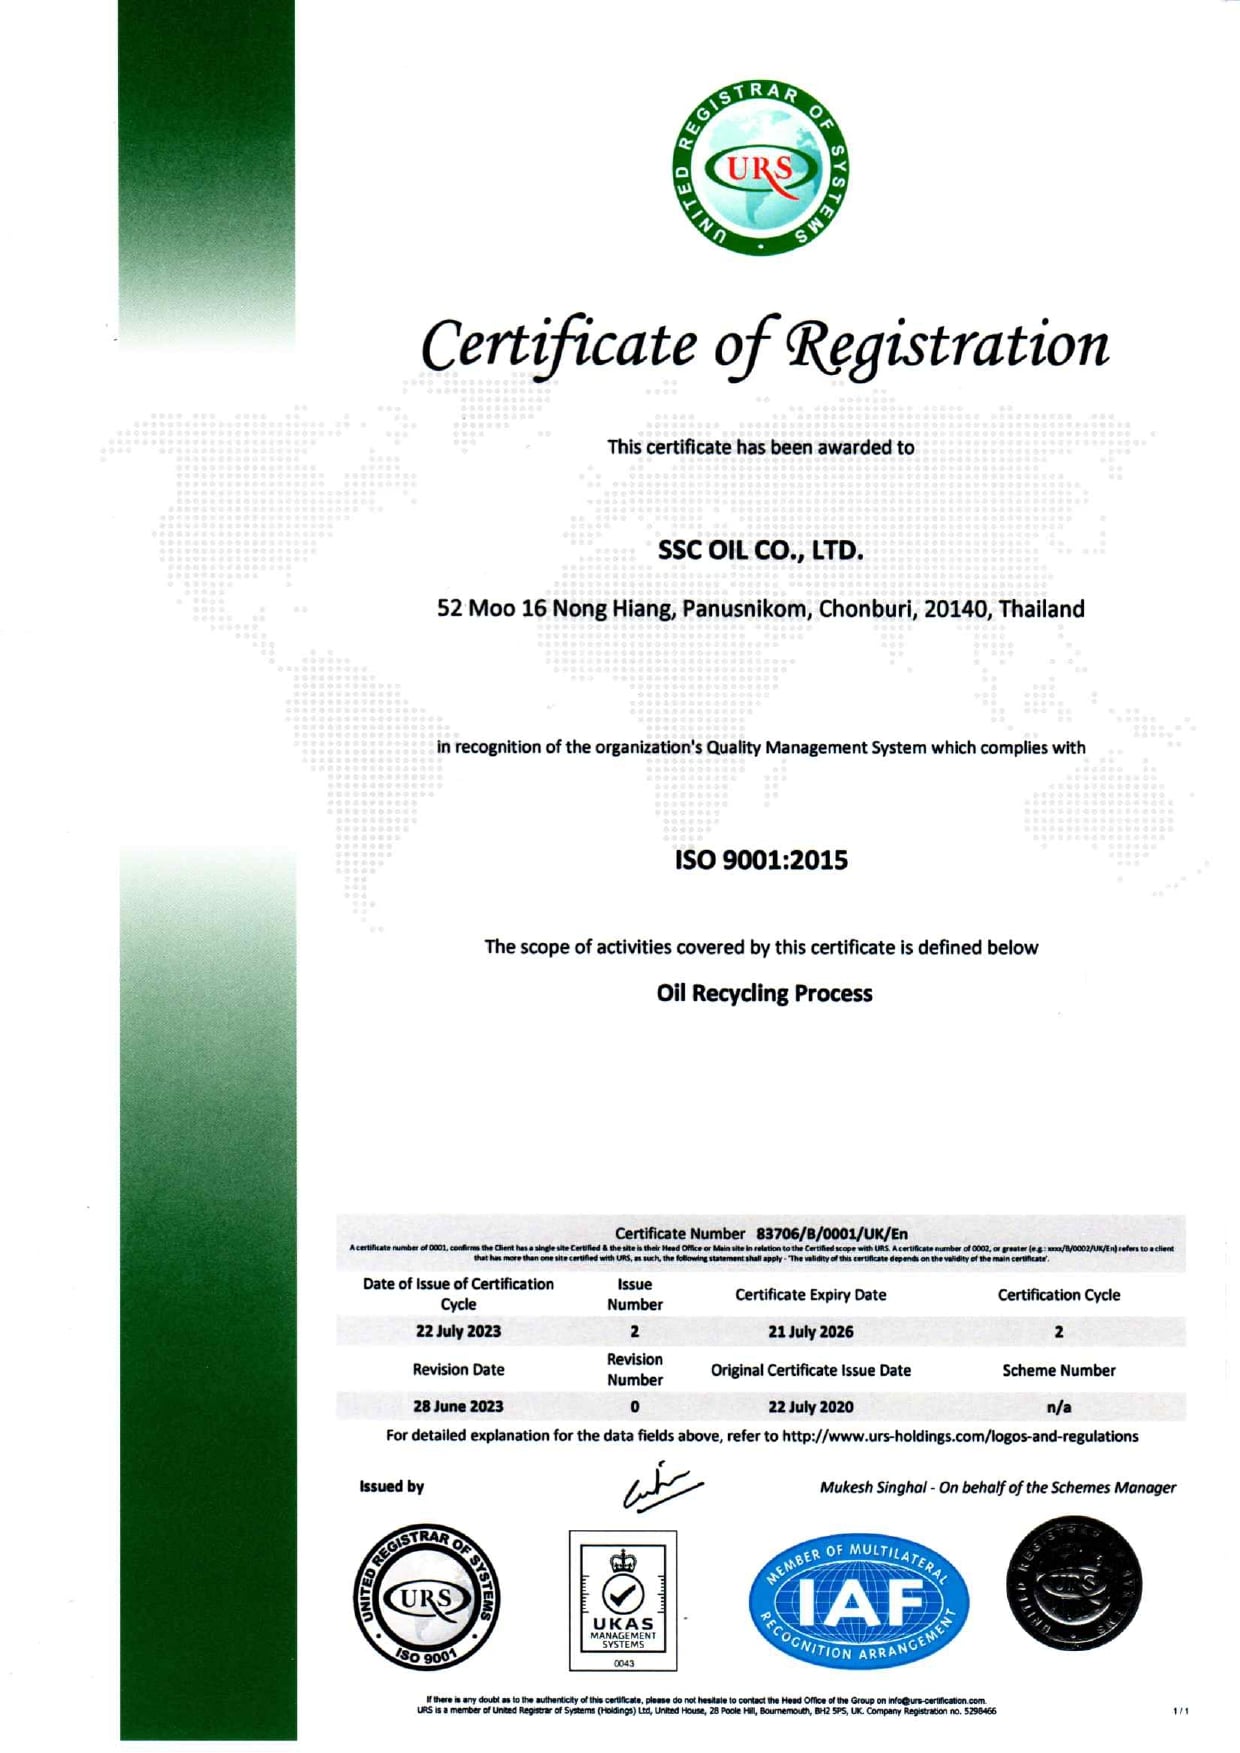 Certificate for ISO 9001-2015 for ssc oil